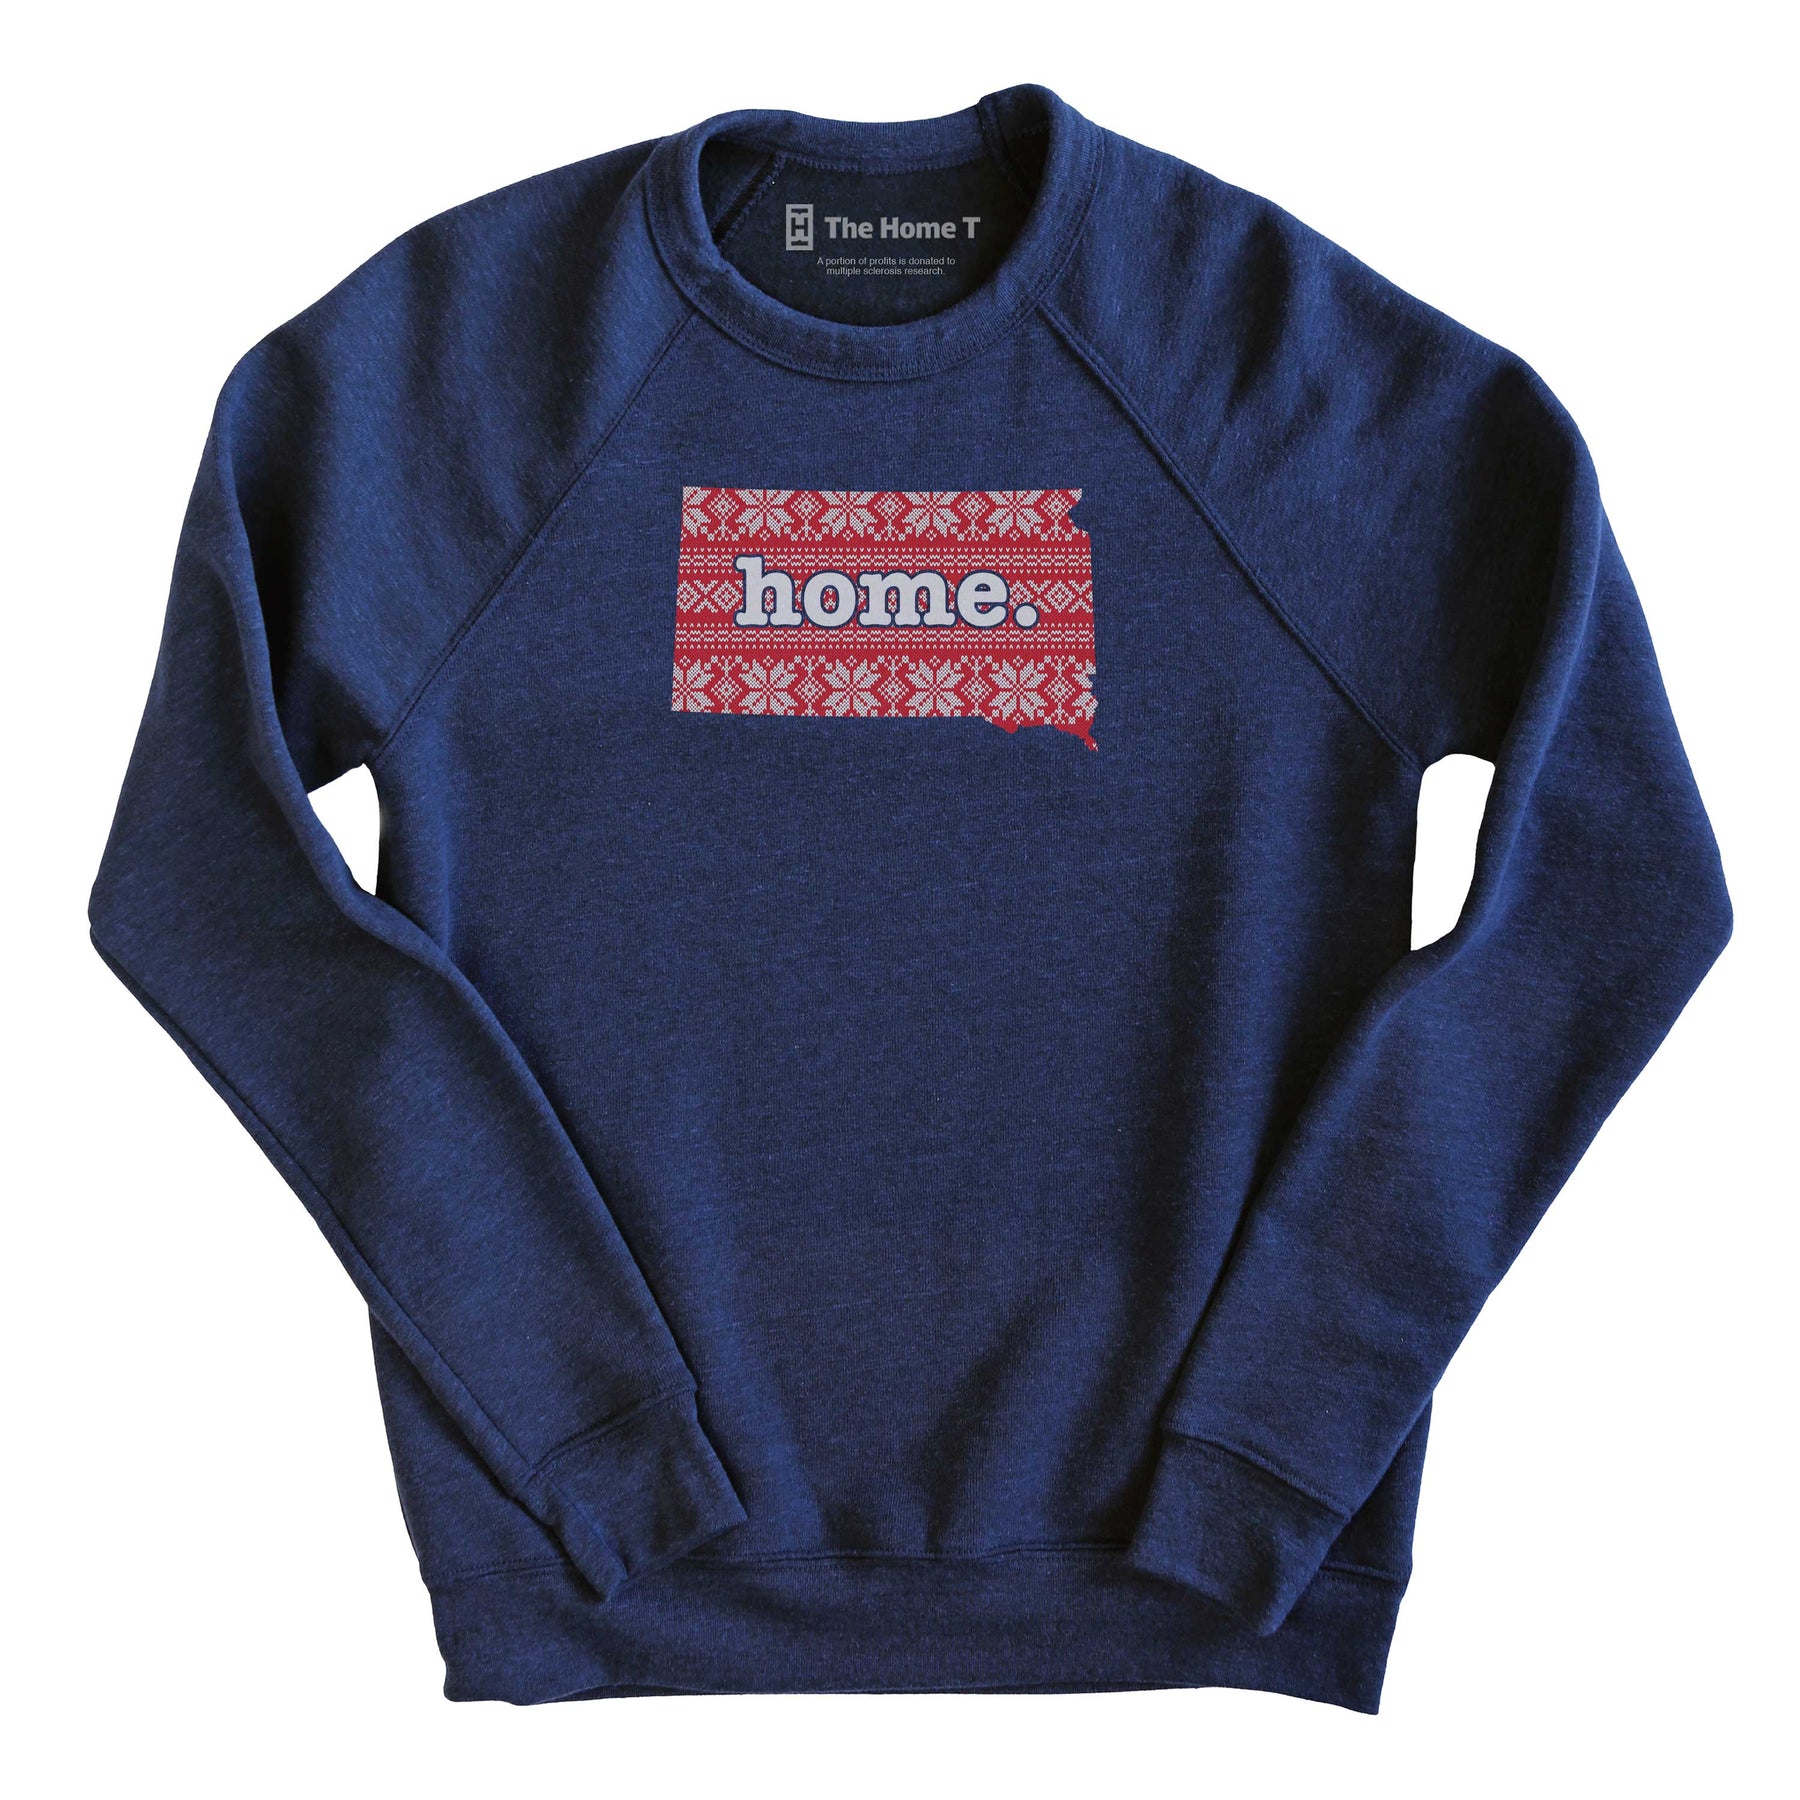 South Dakota Christmas Sweater Pattern Christmas Sweater The Home T XS Navy Sweatshirt